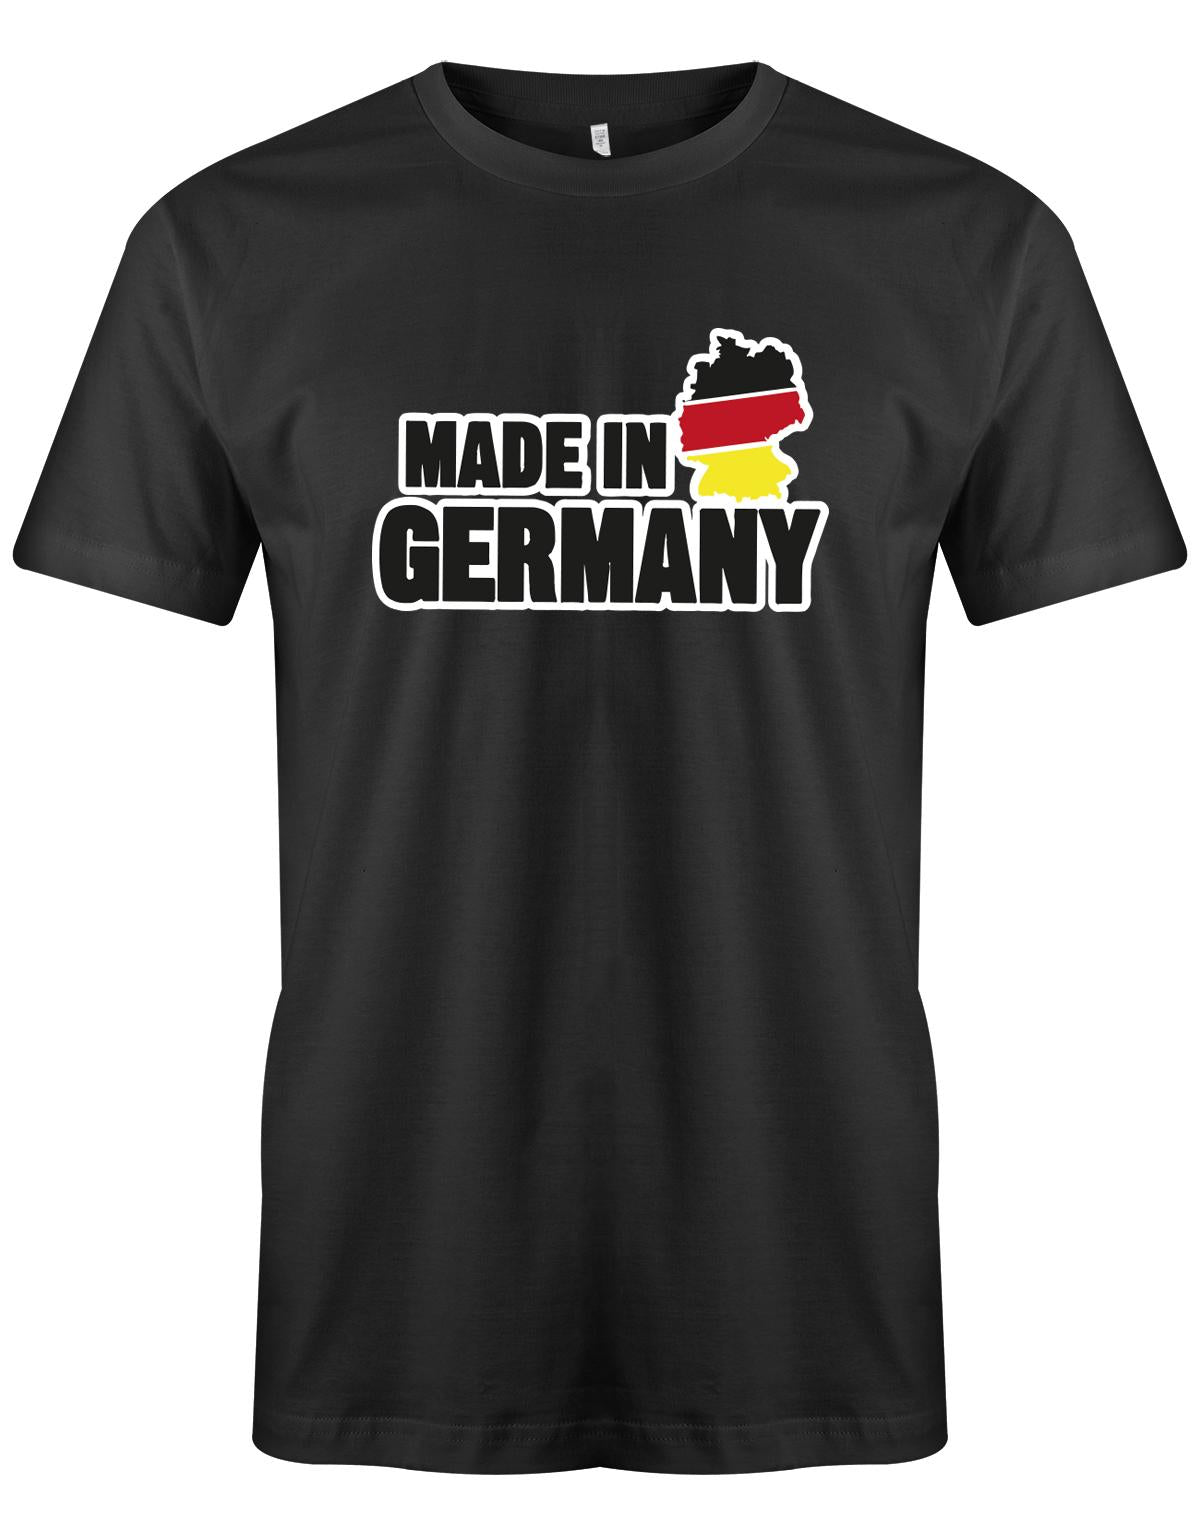 MAde-in-germany-Herren-Shirt-Schwarz